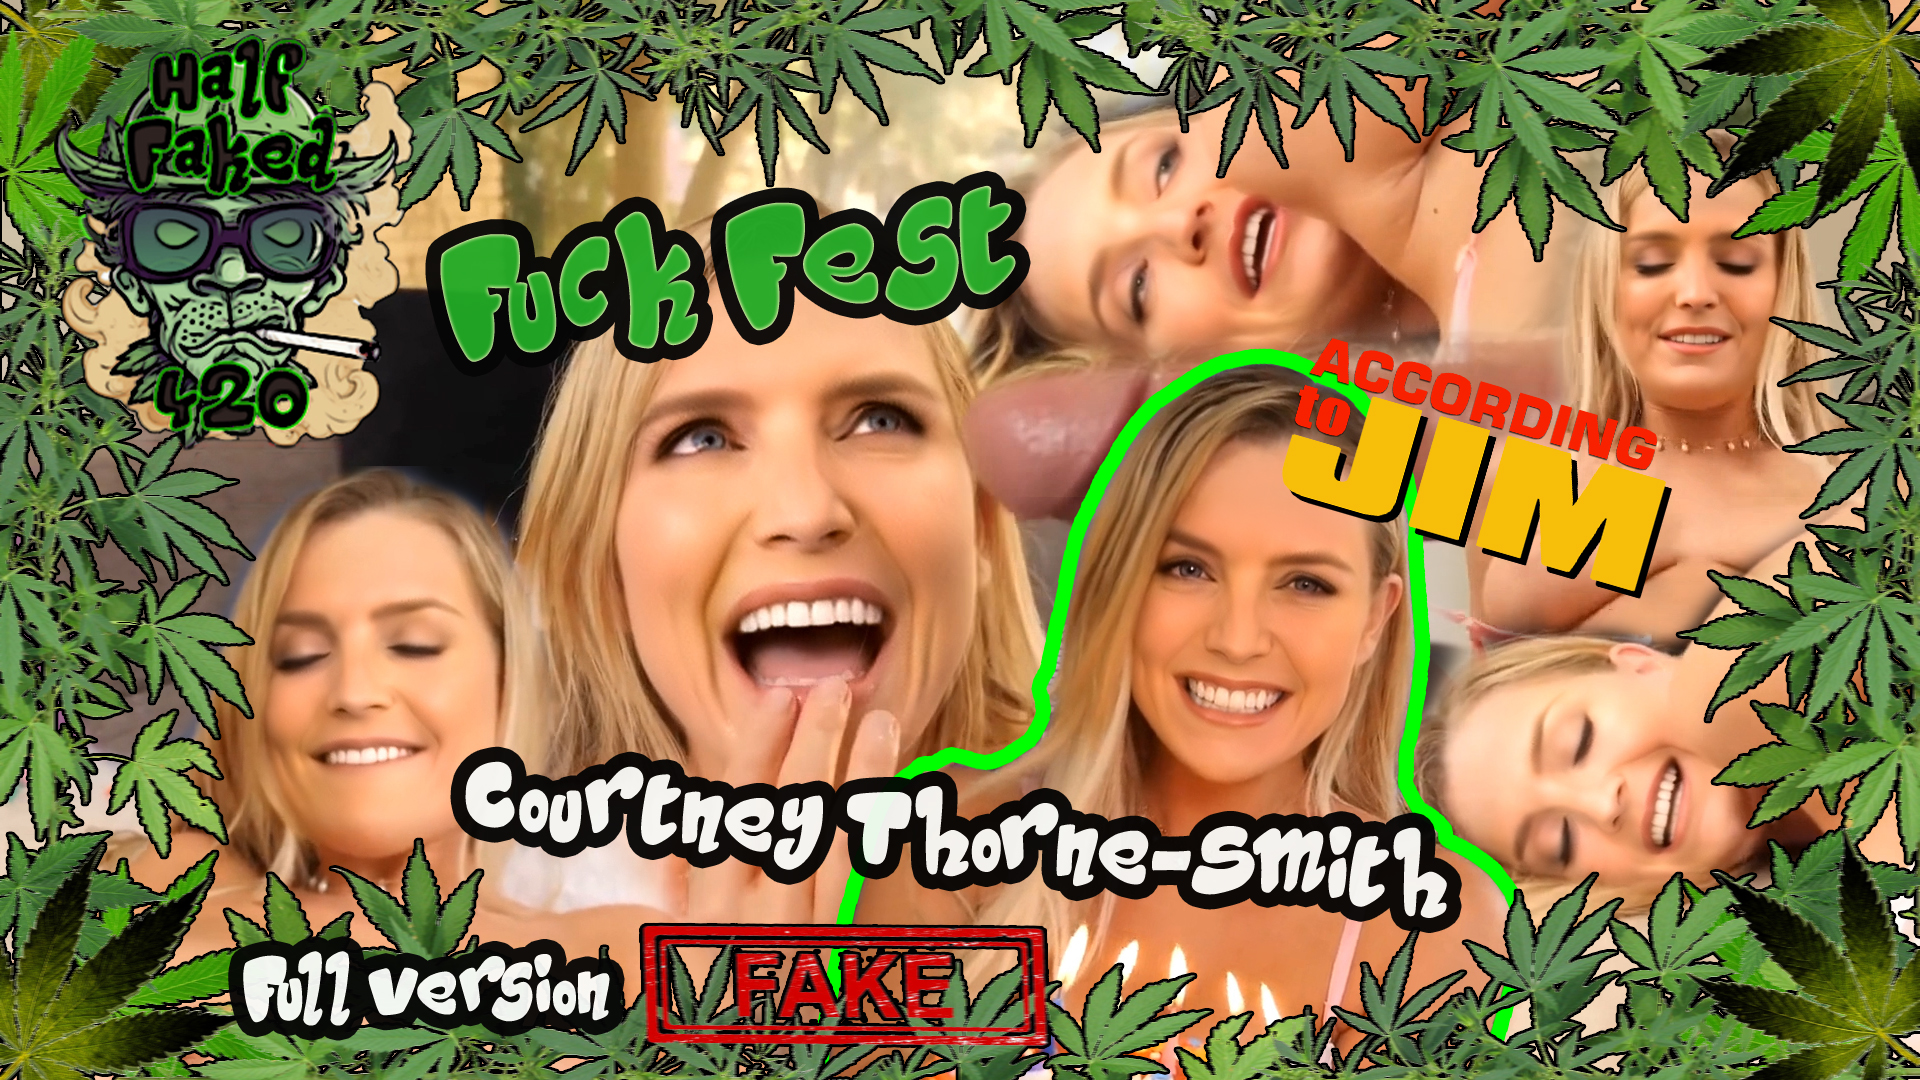 Courtney Thorne-Smith - Fuck Fest | FULL VERSION | FAKE